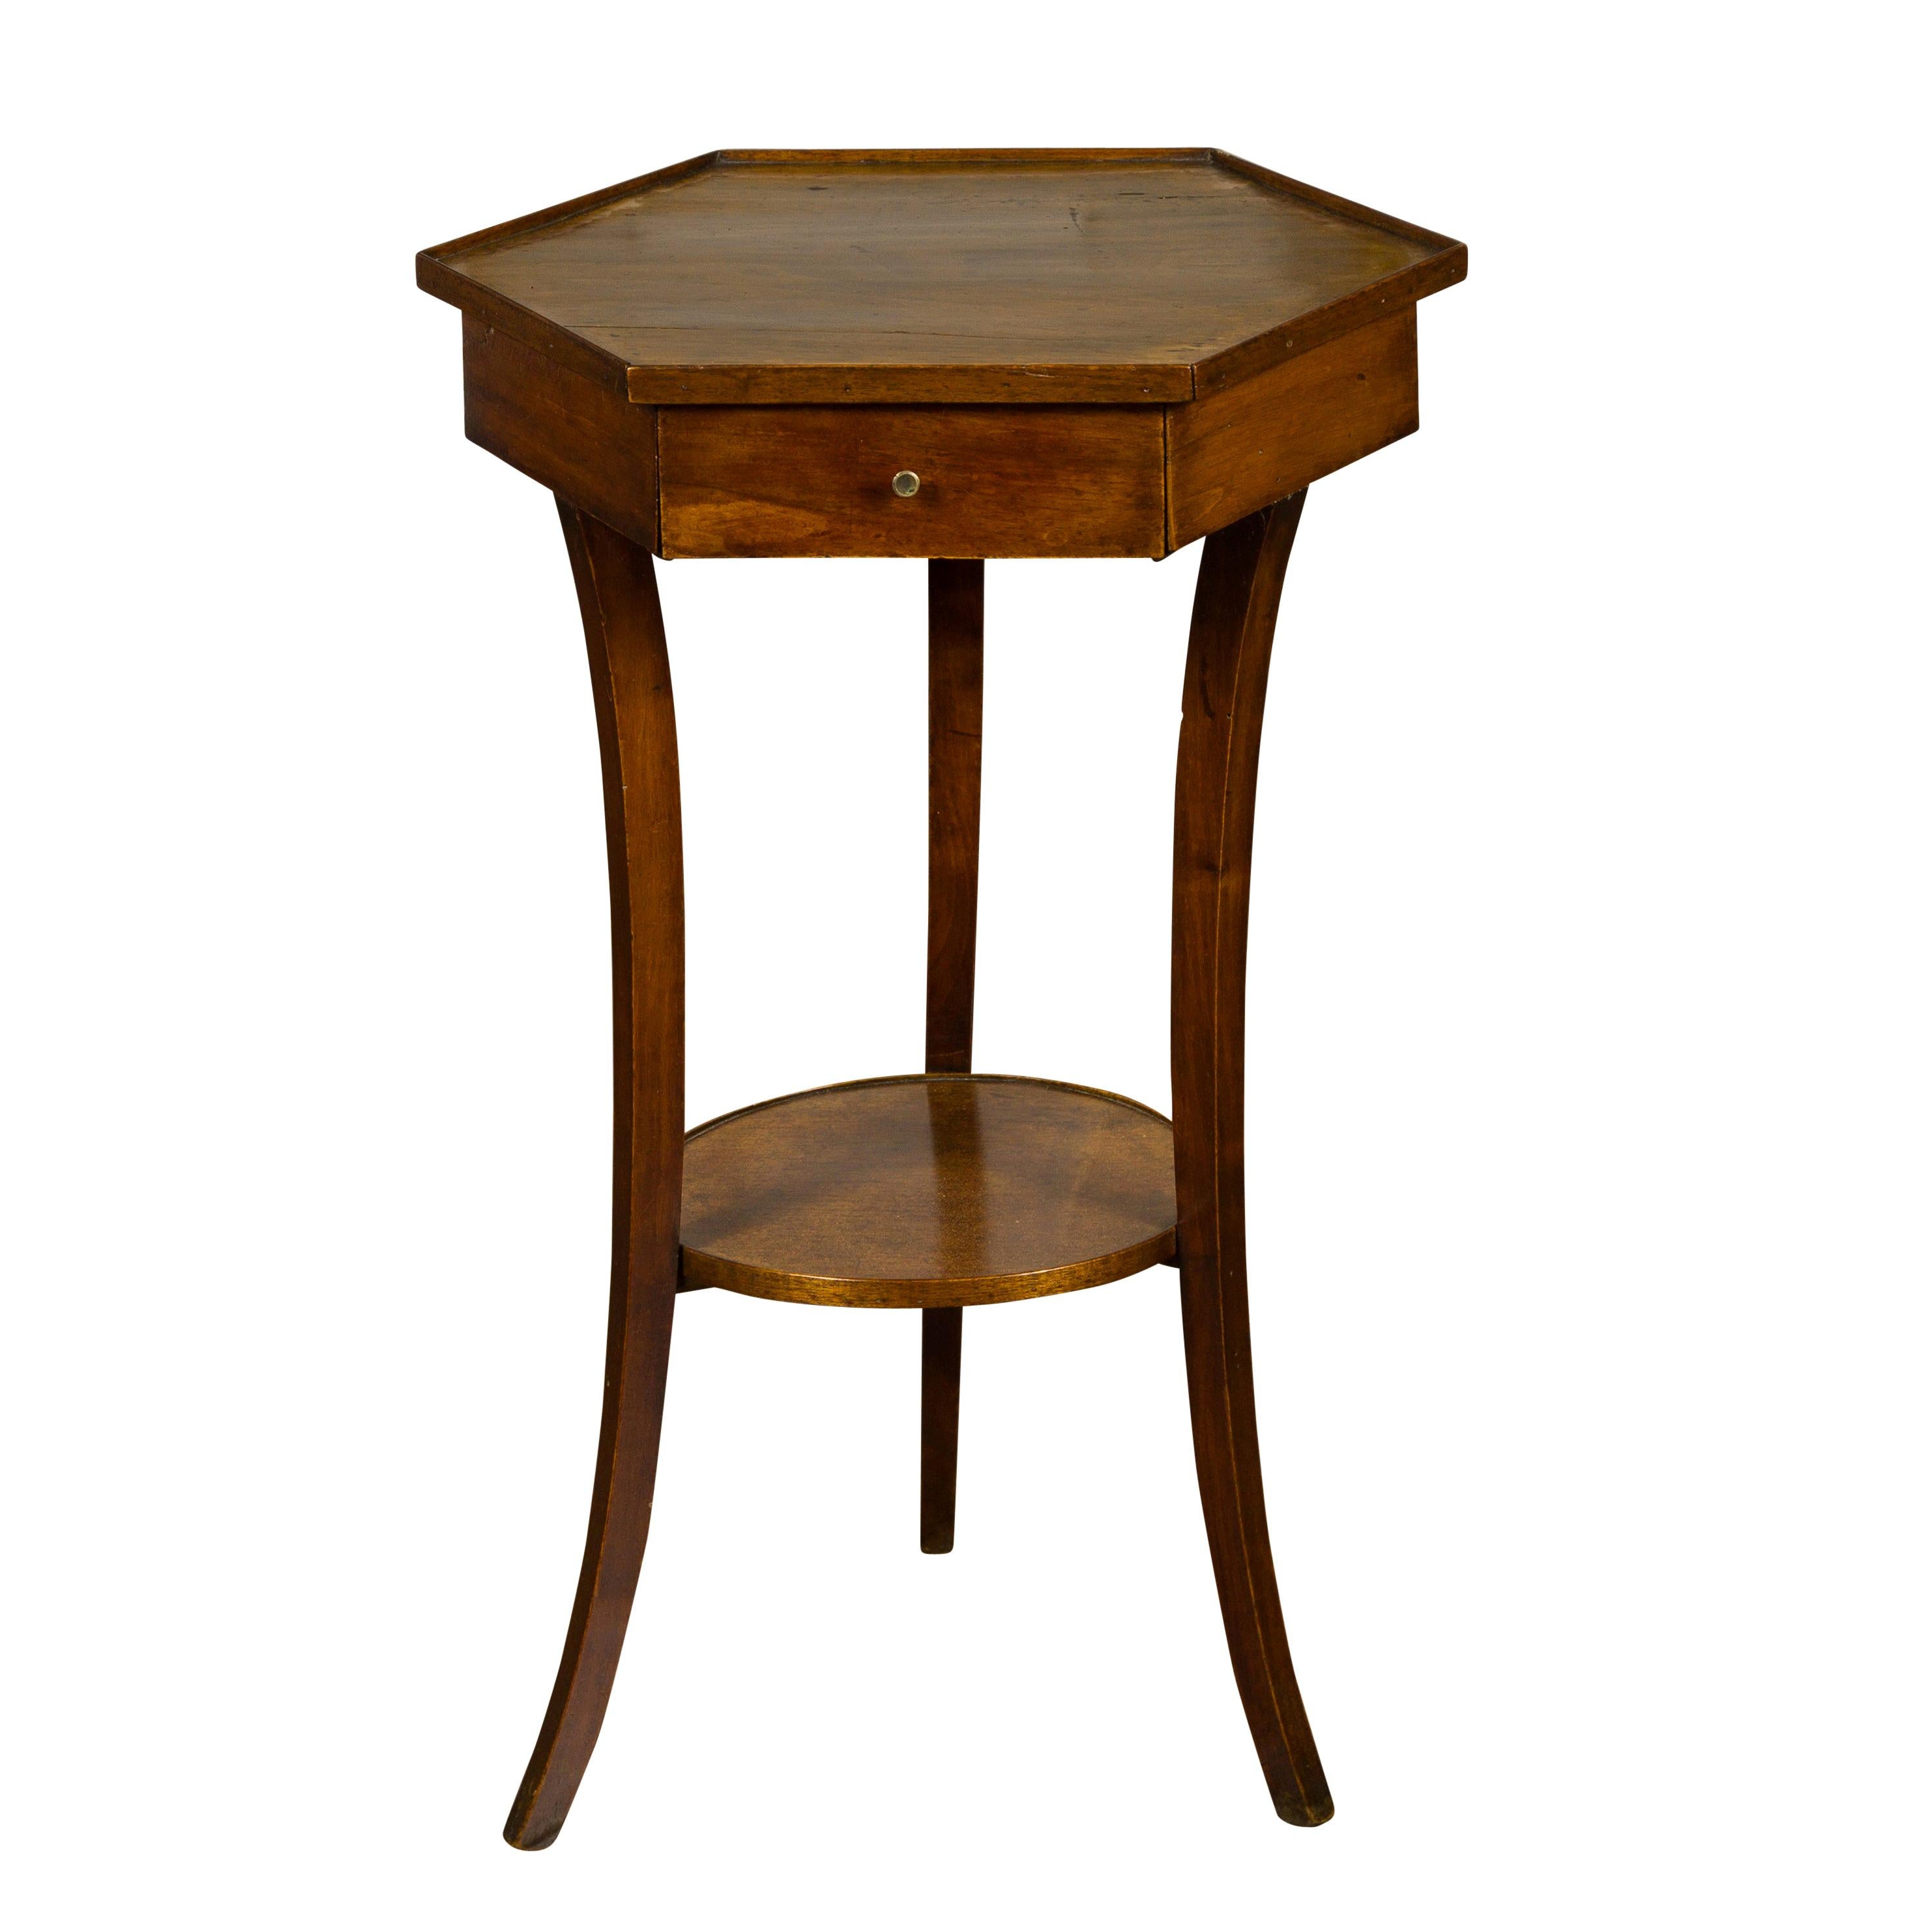 Italian 1850s Walnut Side Table with Hexagonal Top, Single Drawer and Low Shelf